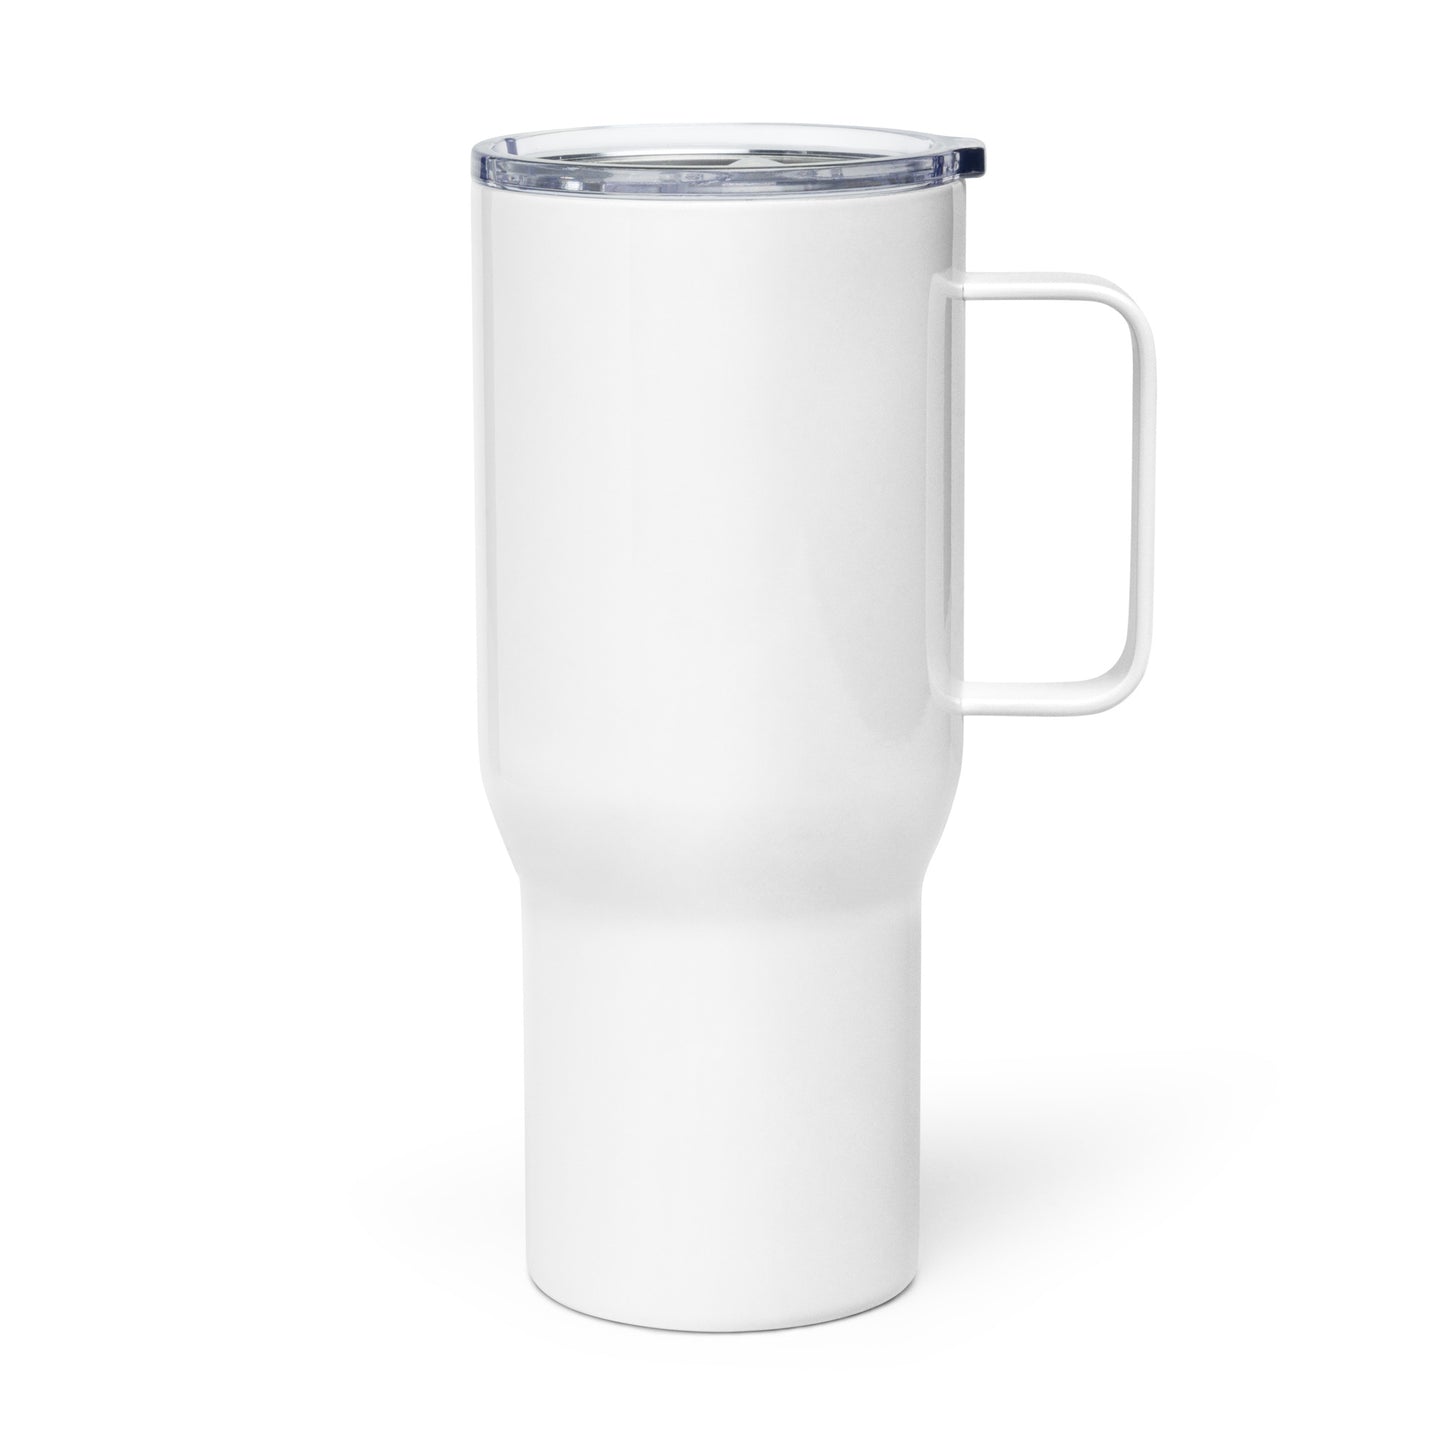 YAHWEH Travel mug with a handle